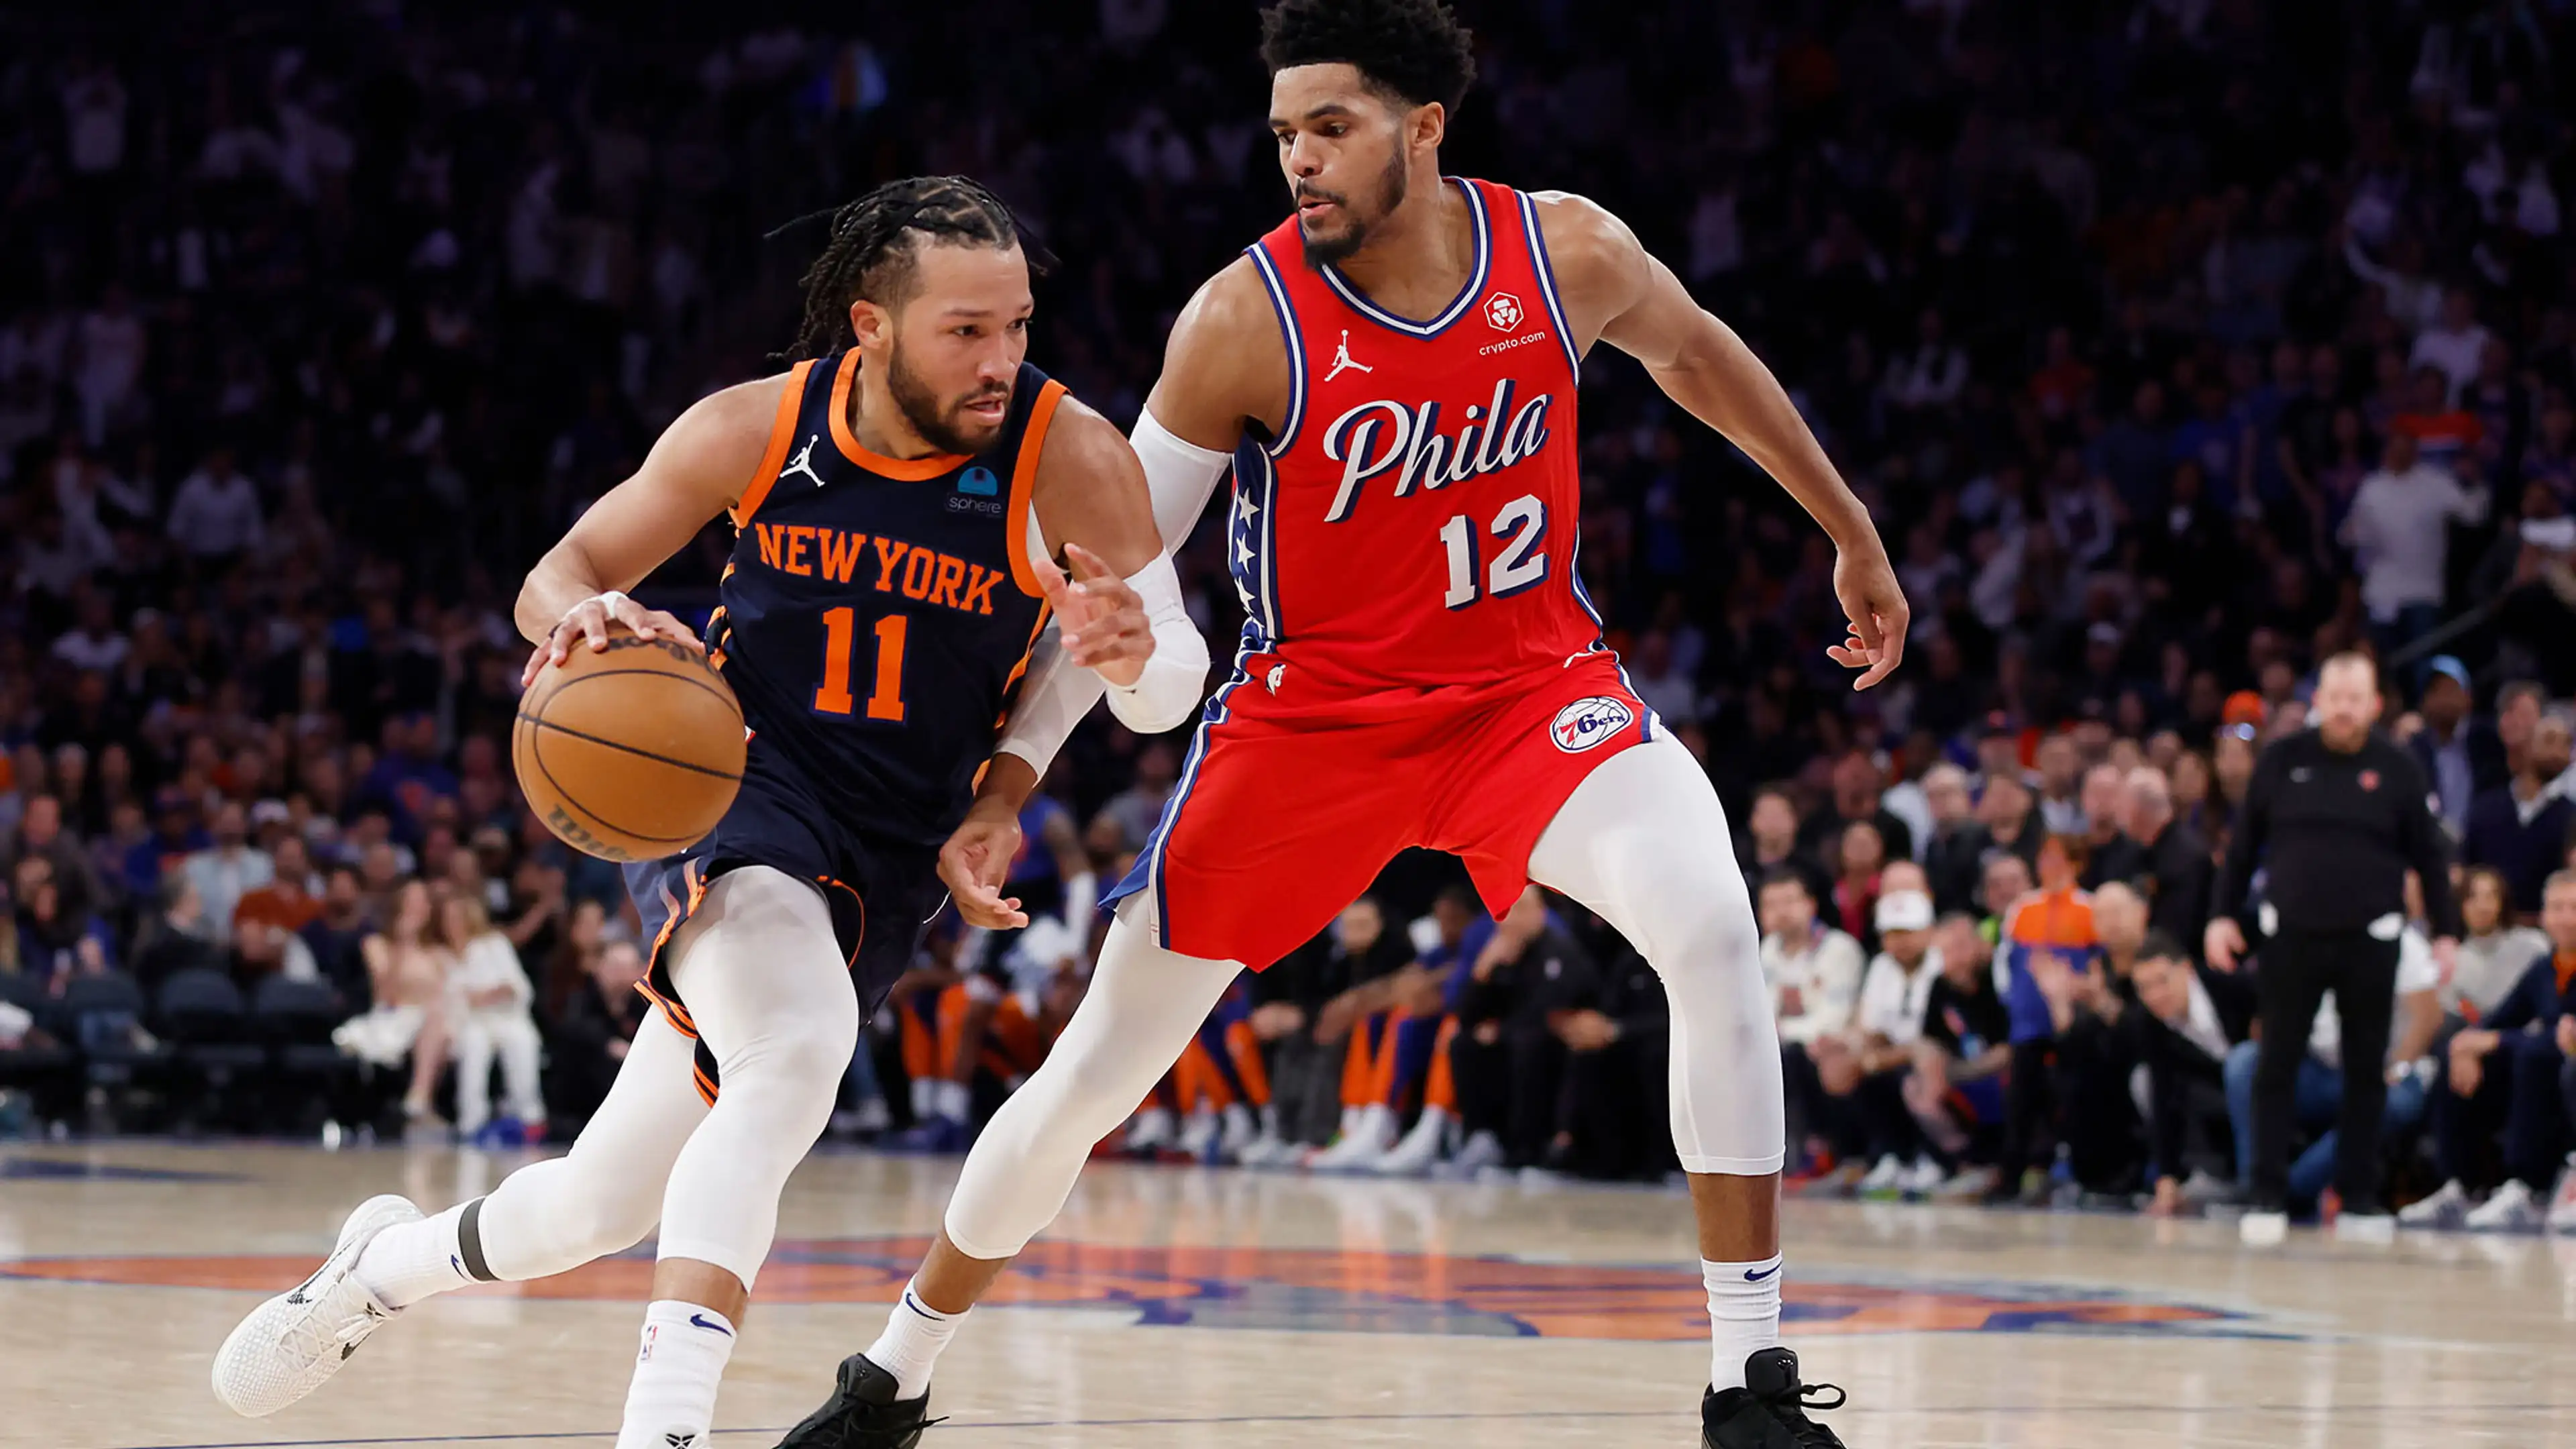 How To Watch The Philadelphia 76ers Vs. New York Knicks NBA Playoffs Game Tonight